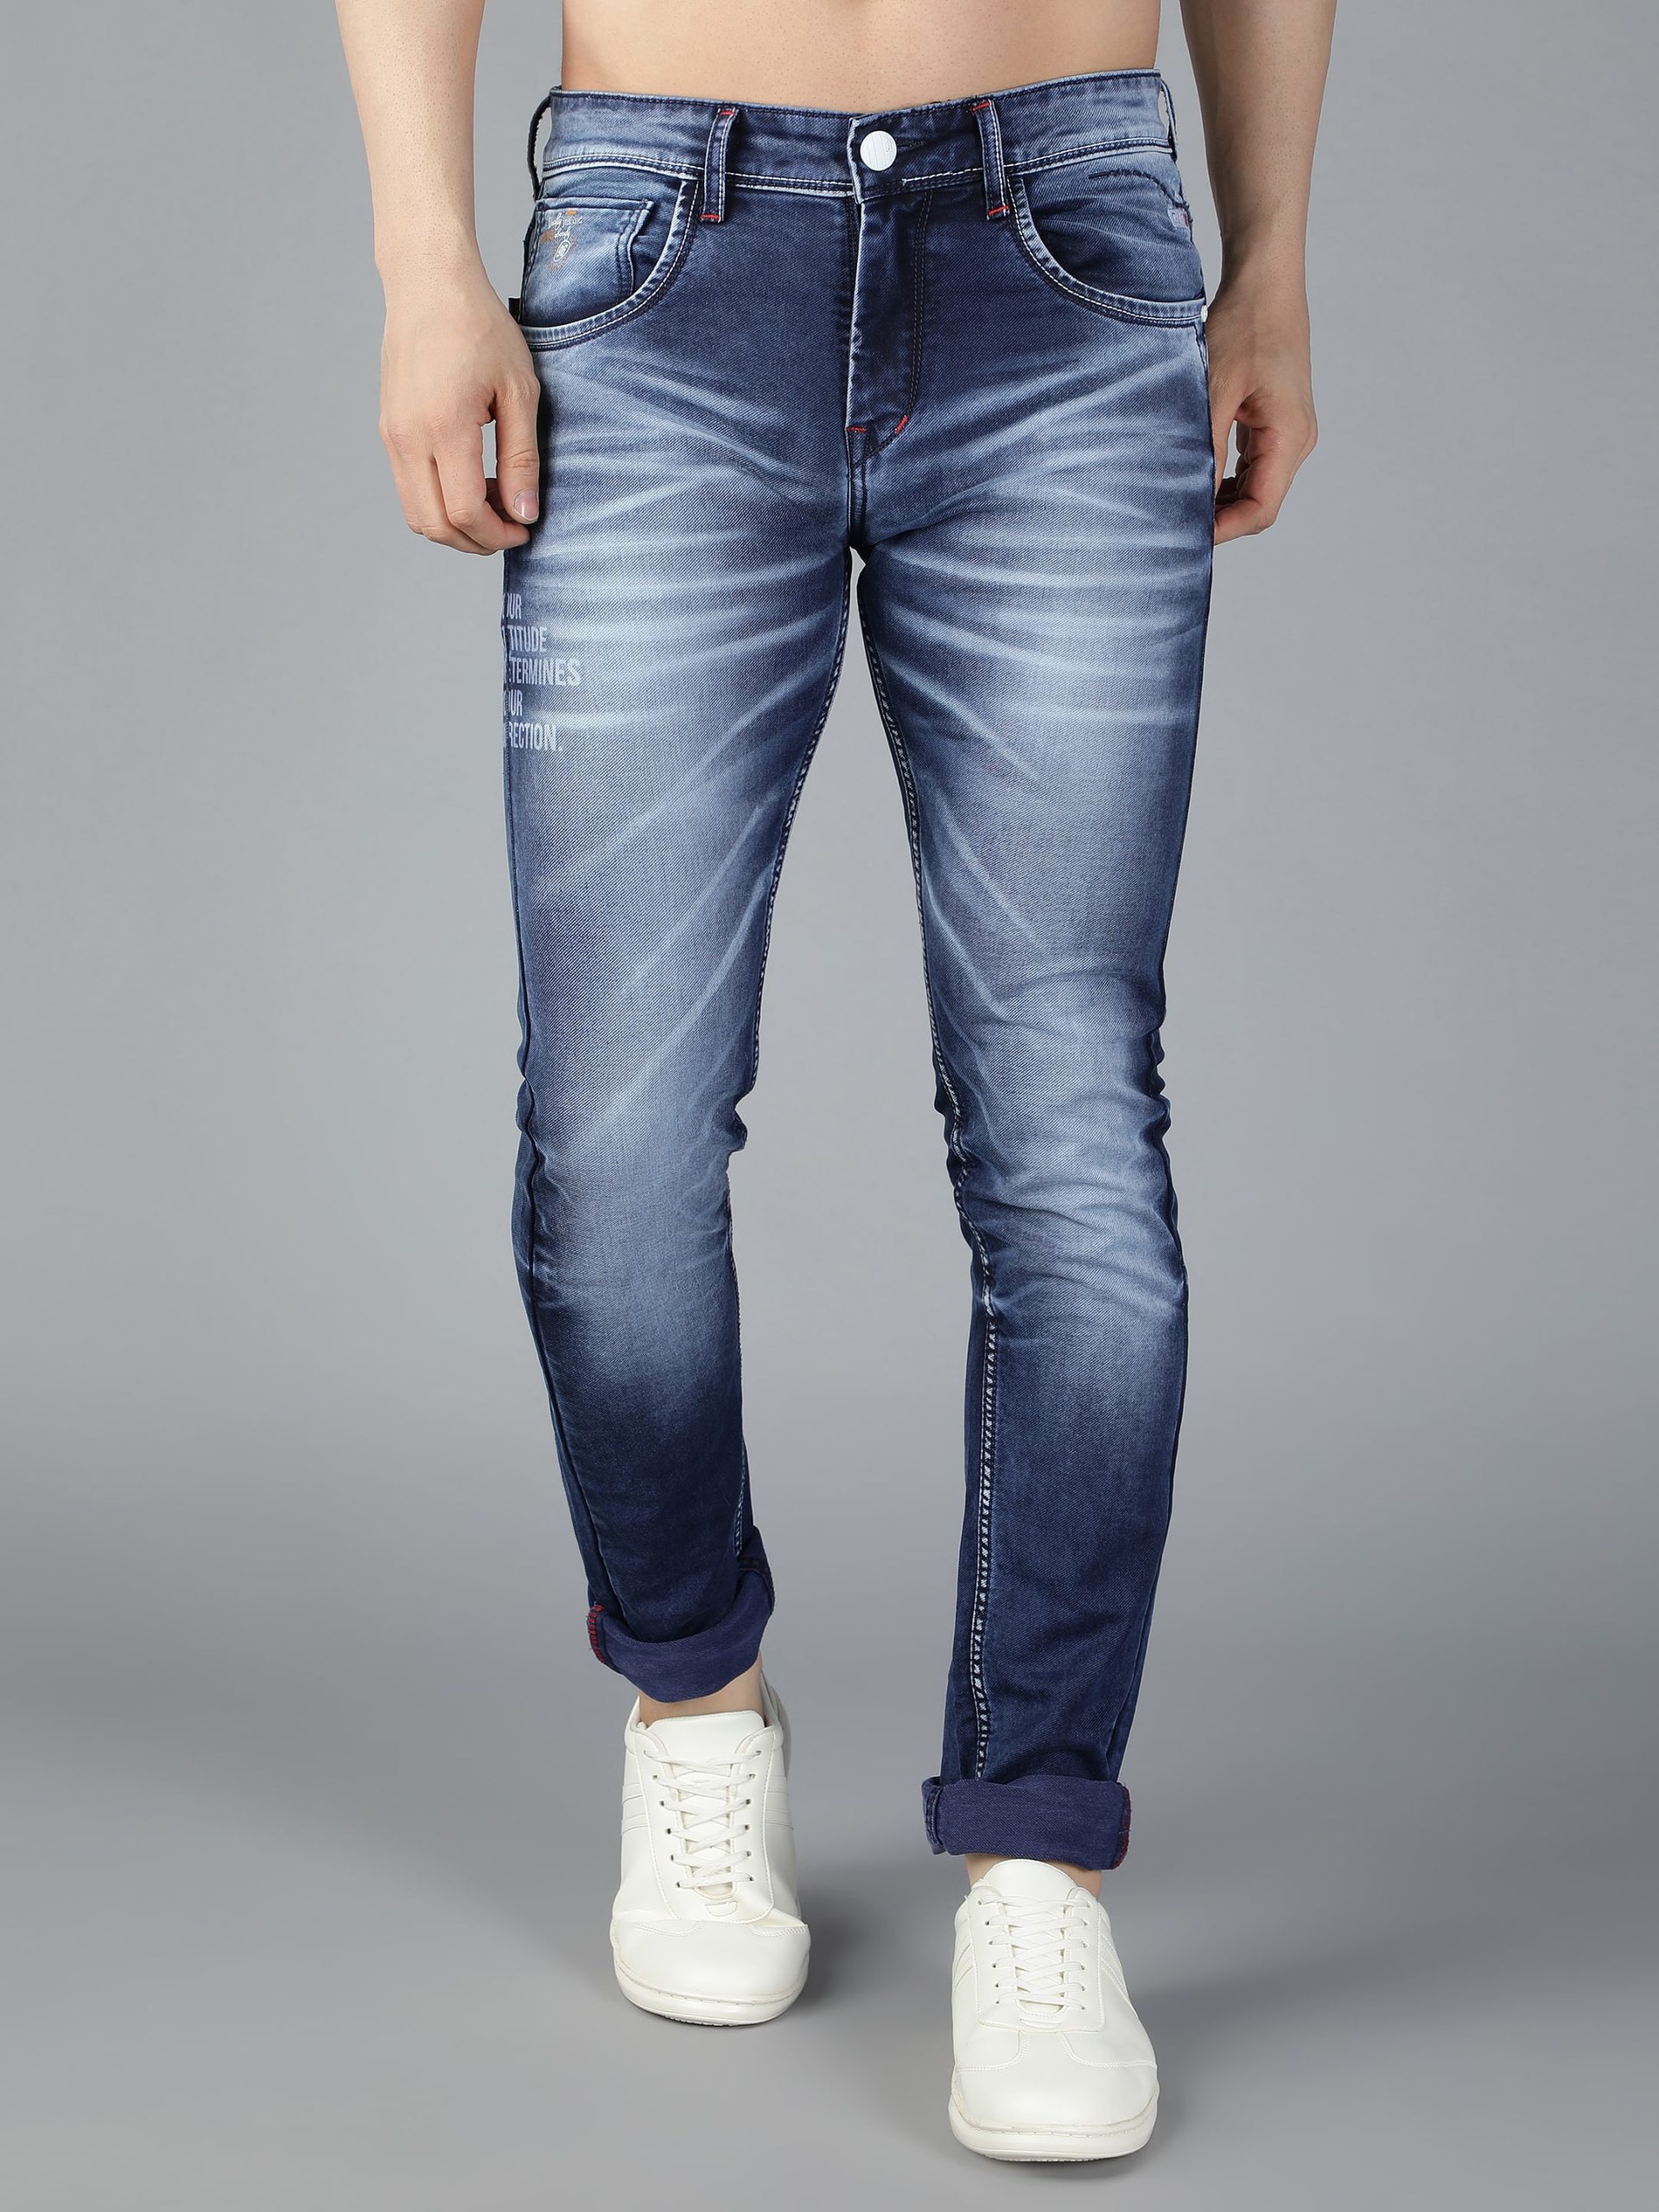 Urban Riser Mid Rise Jeans – ustitch